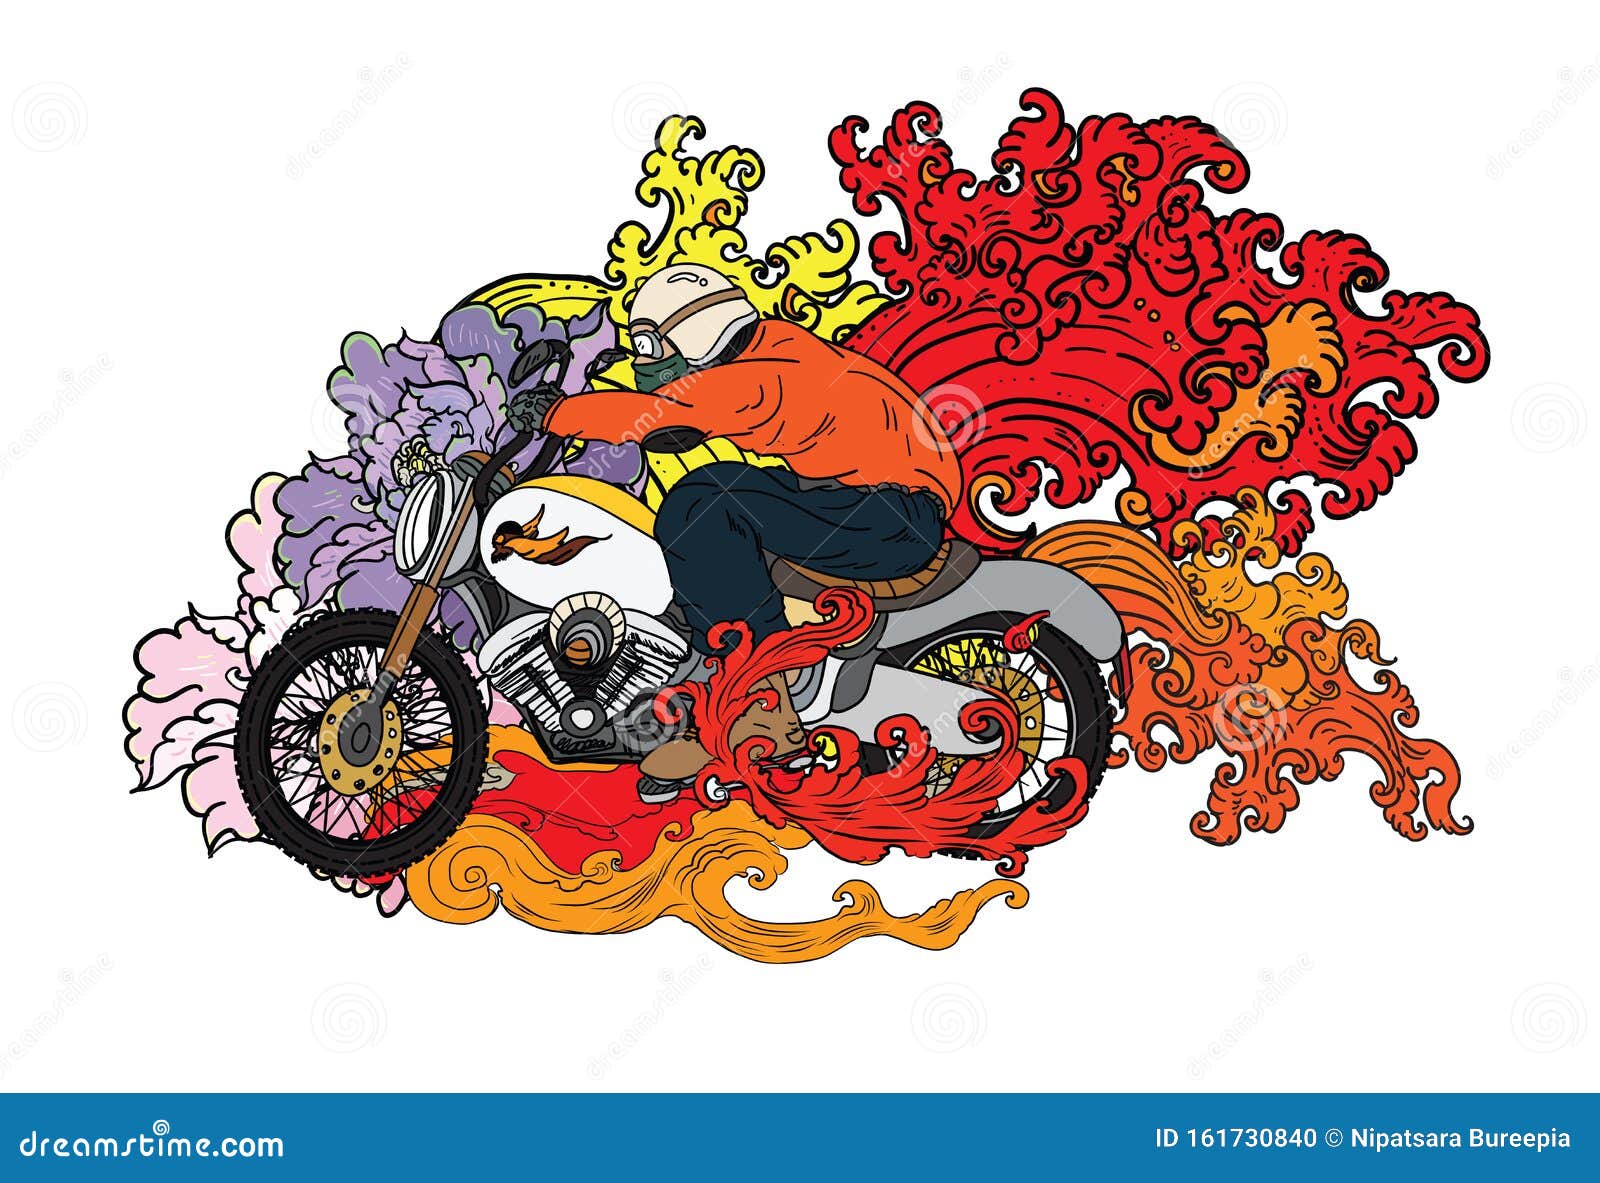 60 Motorcycle Tattoos For Men - Two Wheel Design Ideas | Motorcycle tattoos,  Harley tattoos, Biker tattoos